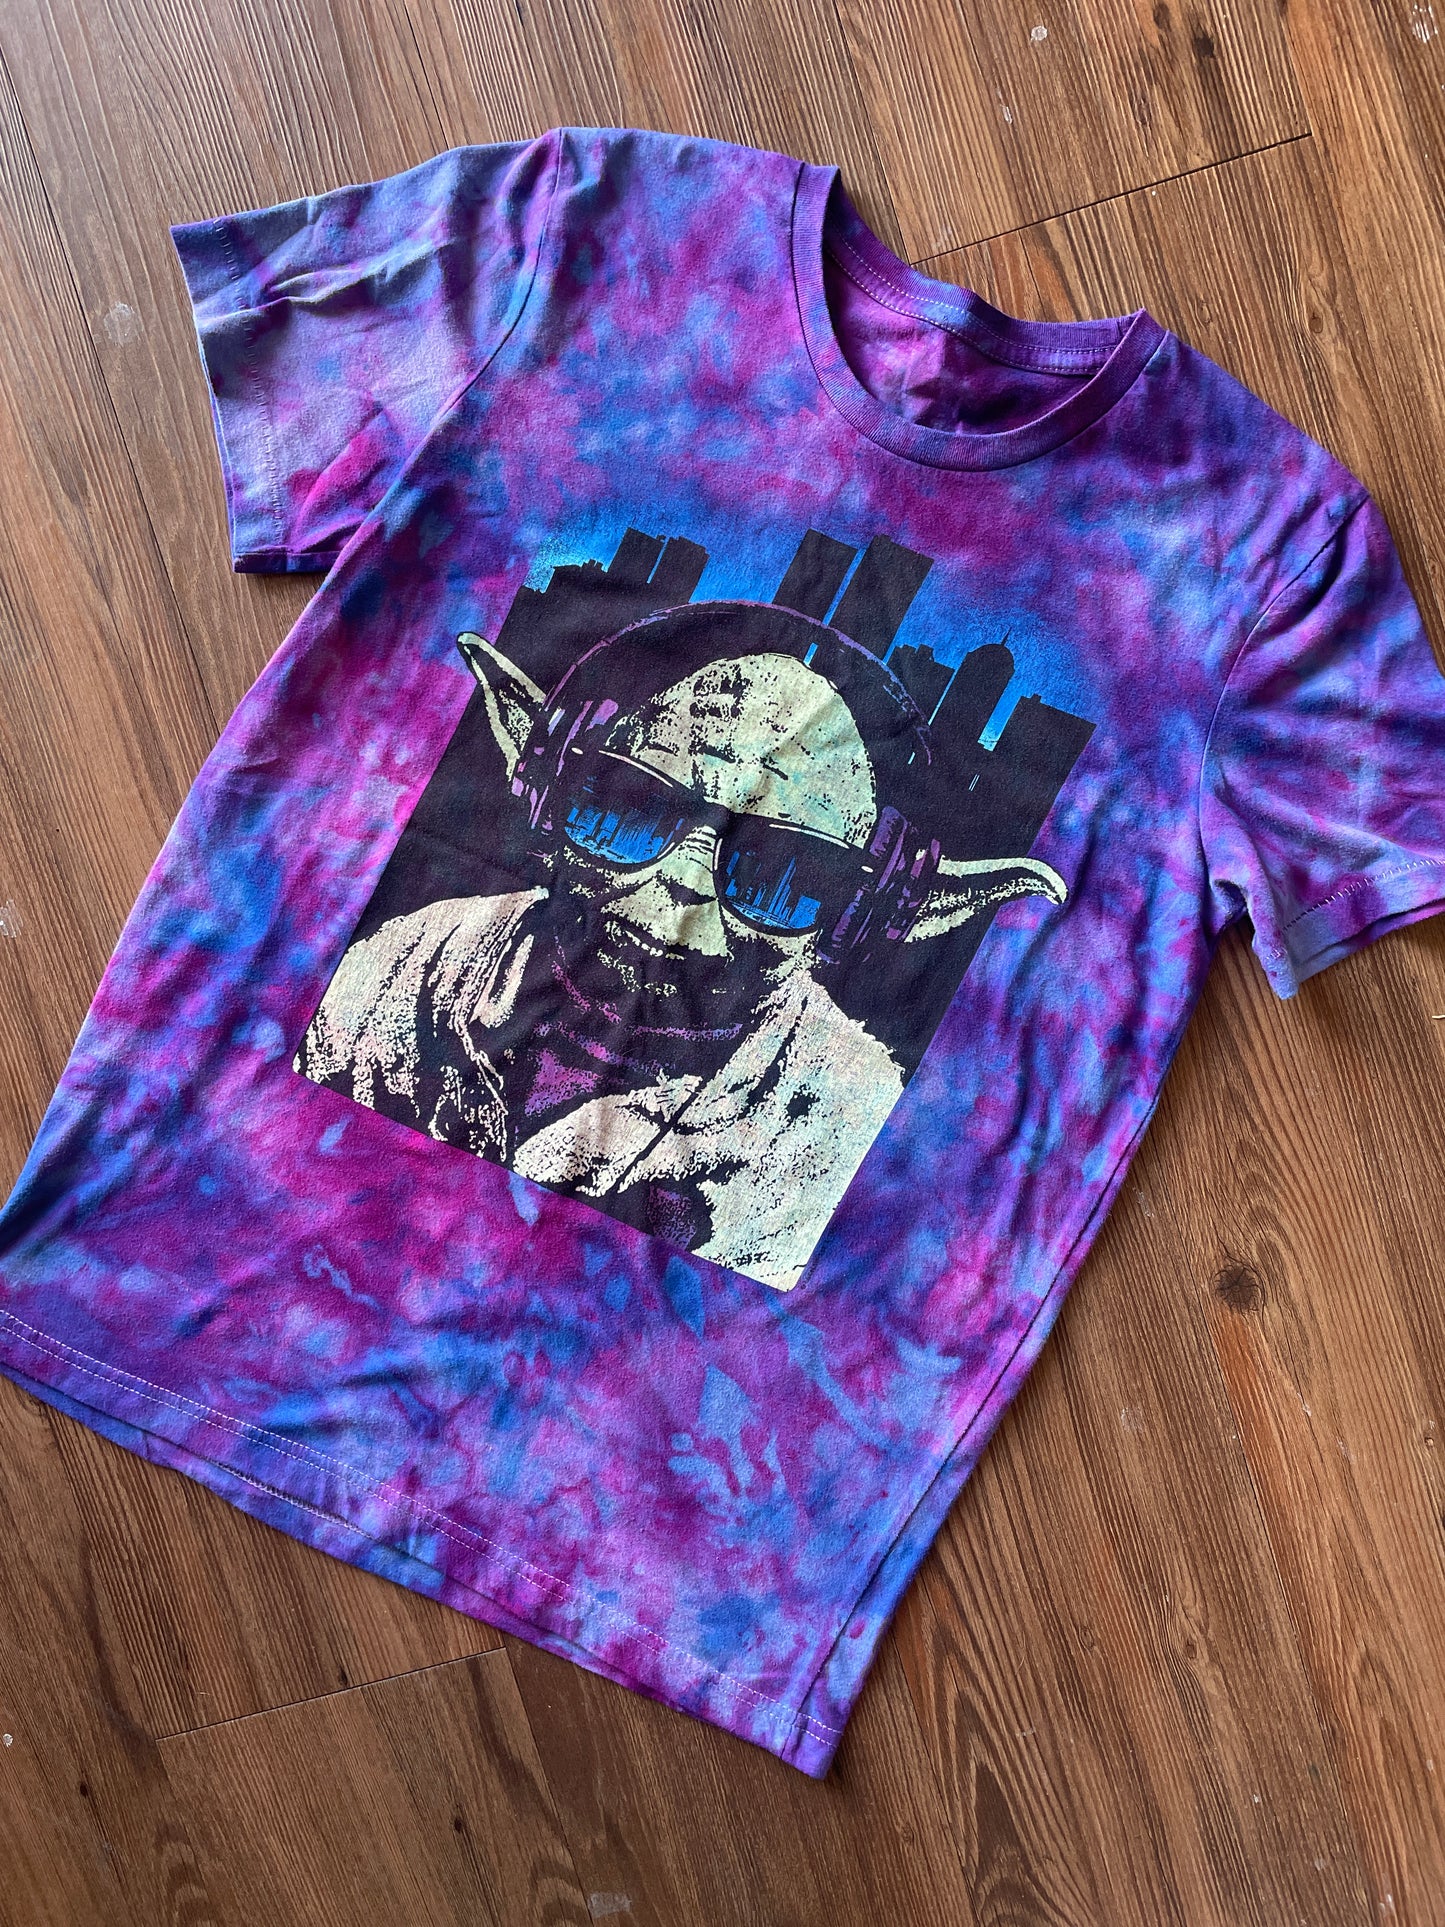 MEDIUM Men’s Urban Yoda T-Shirt | Stars Wars Handmade Galaxy Tie Dye Short Sleeve